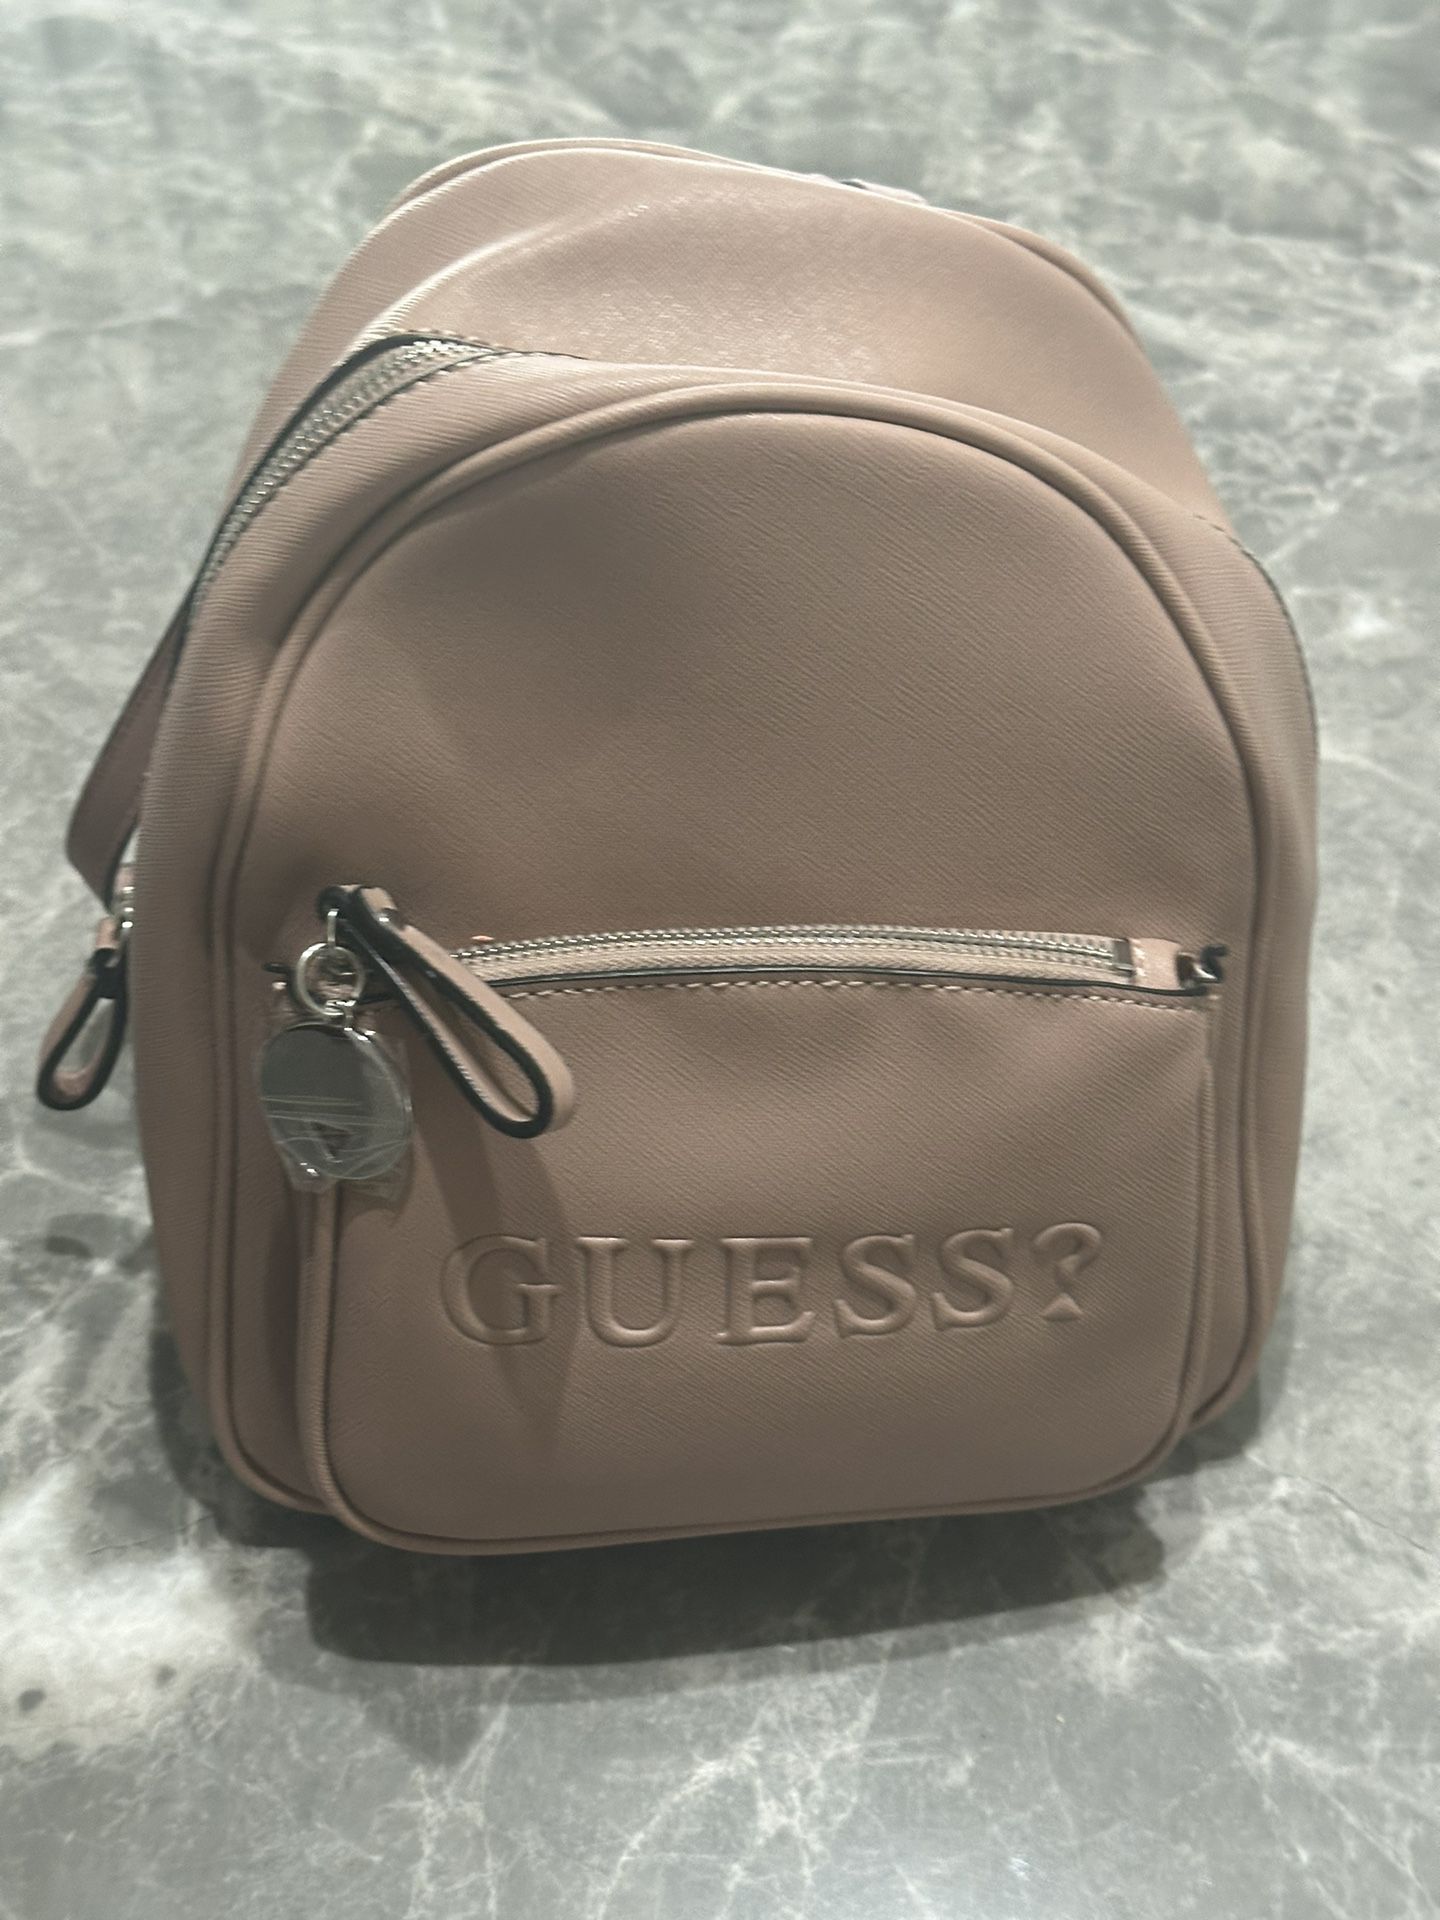 Guess Powder Mauve Guess Los Angeles Women’s Backpack Packable Handbag NWT